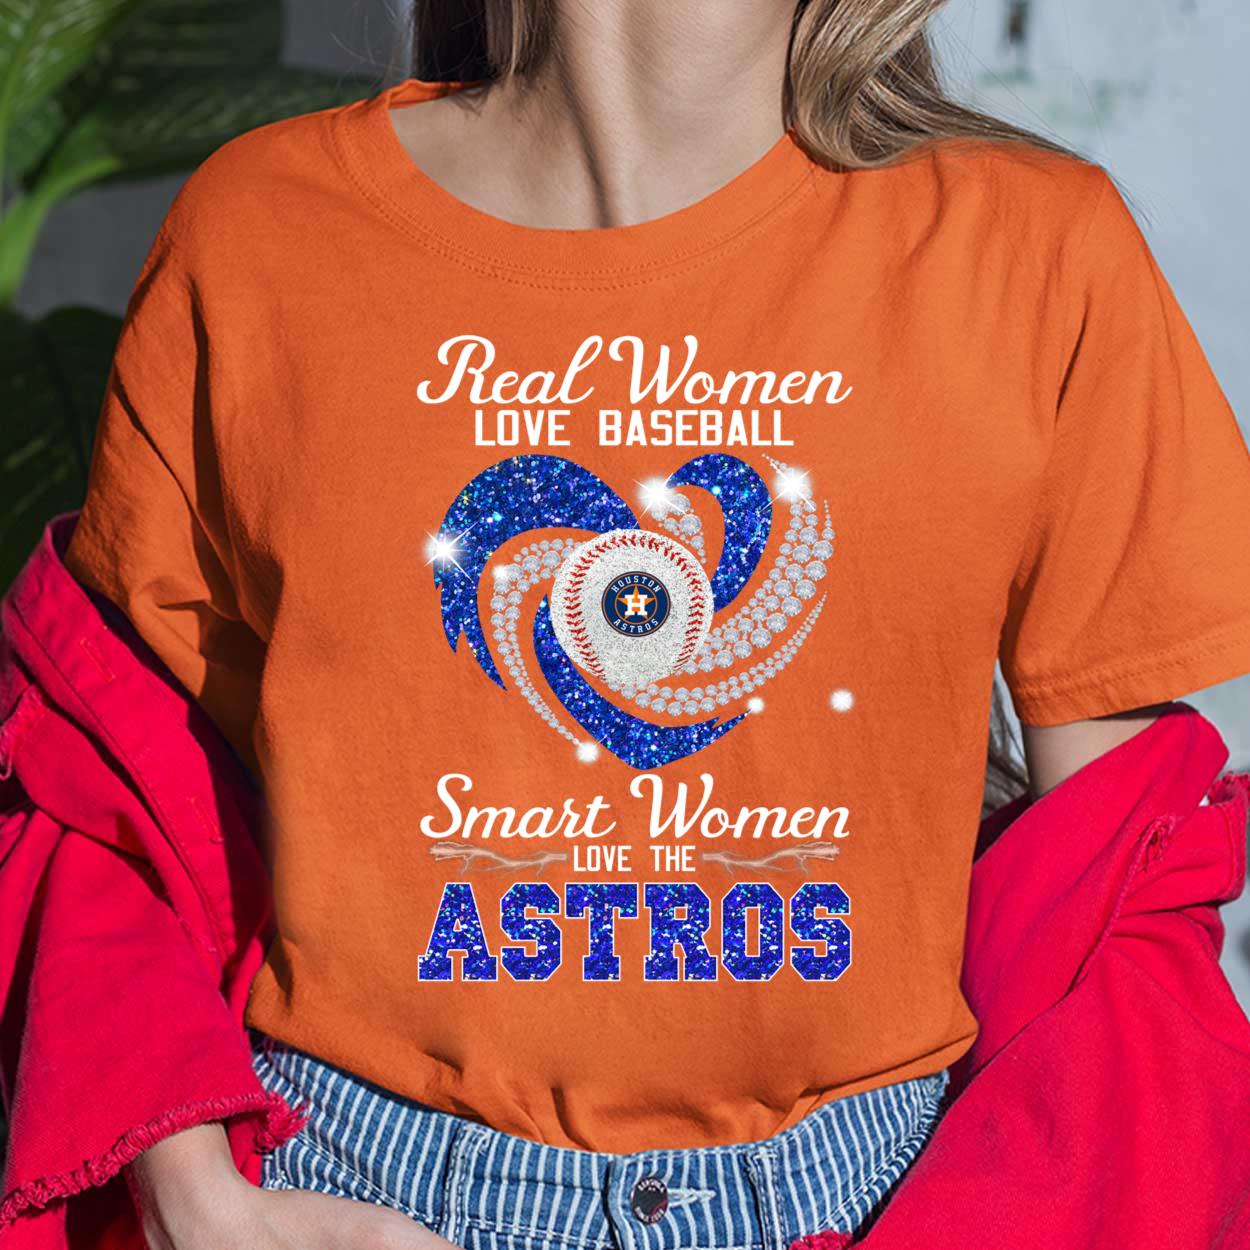 Snoopy And Woodstock Real Women Love Baseball Smart Women Love The Houston Astros  shirt, hoodie, longsleeve, sweatshirt, v-neck tee